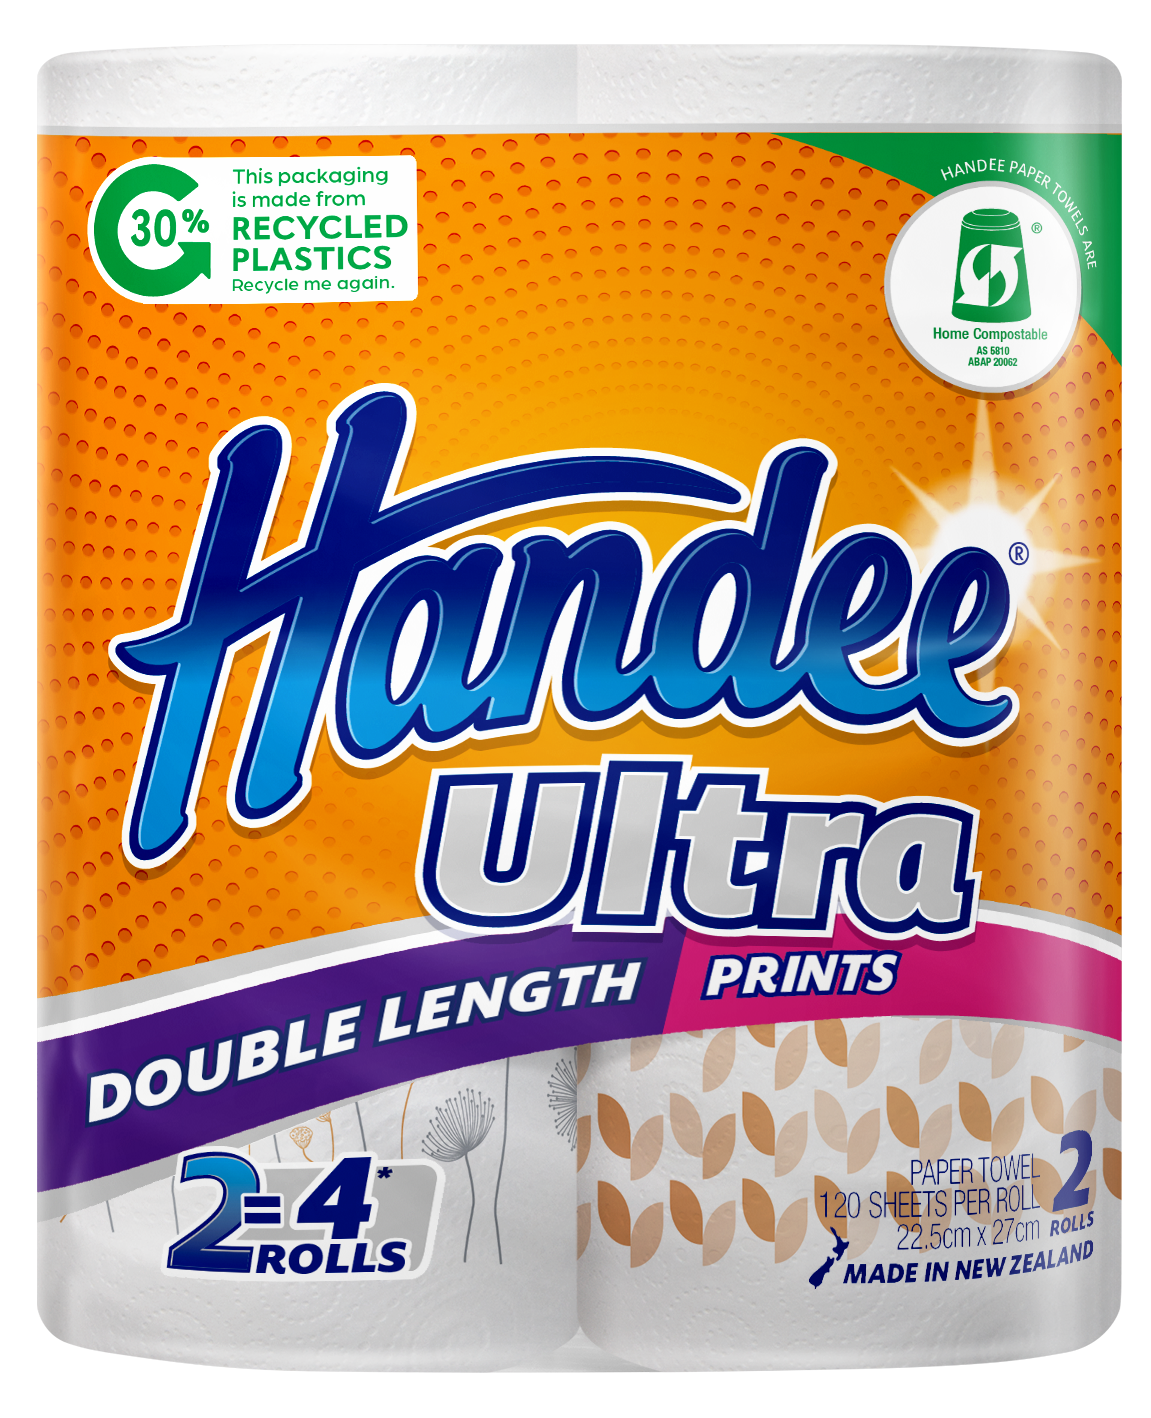 Handee Ultra Double Length Prints